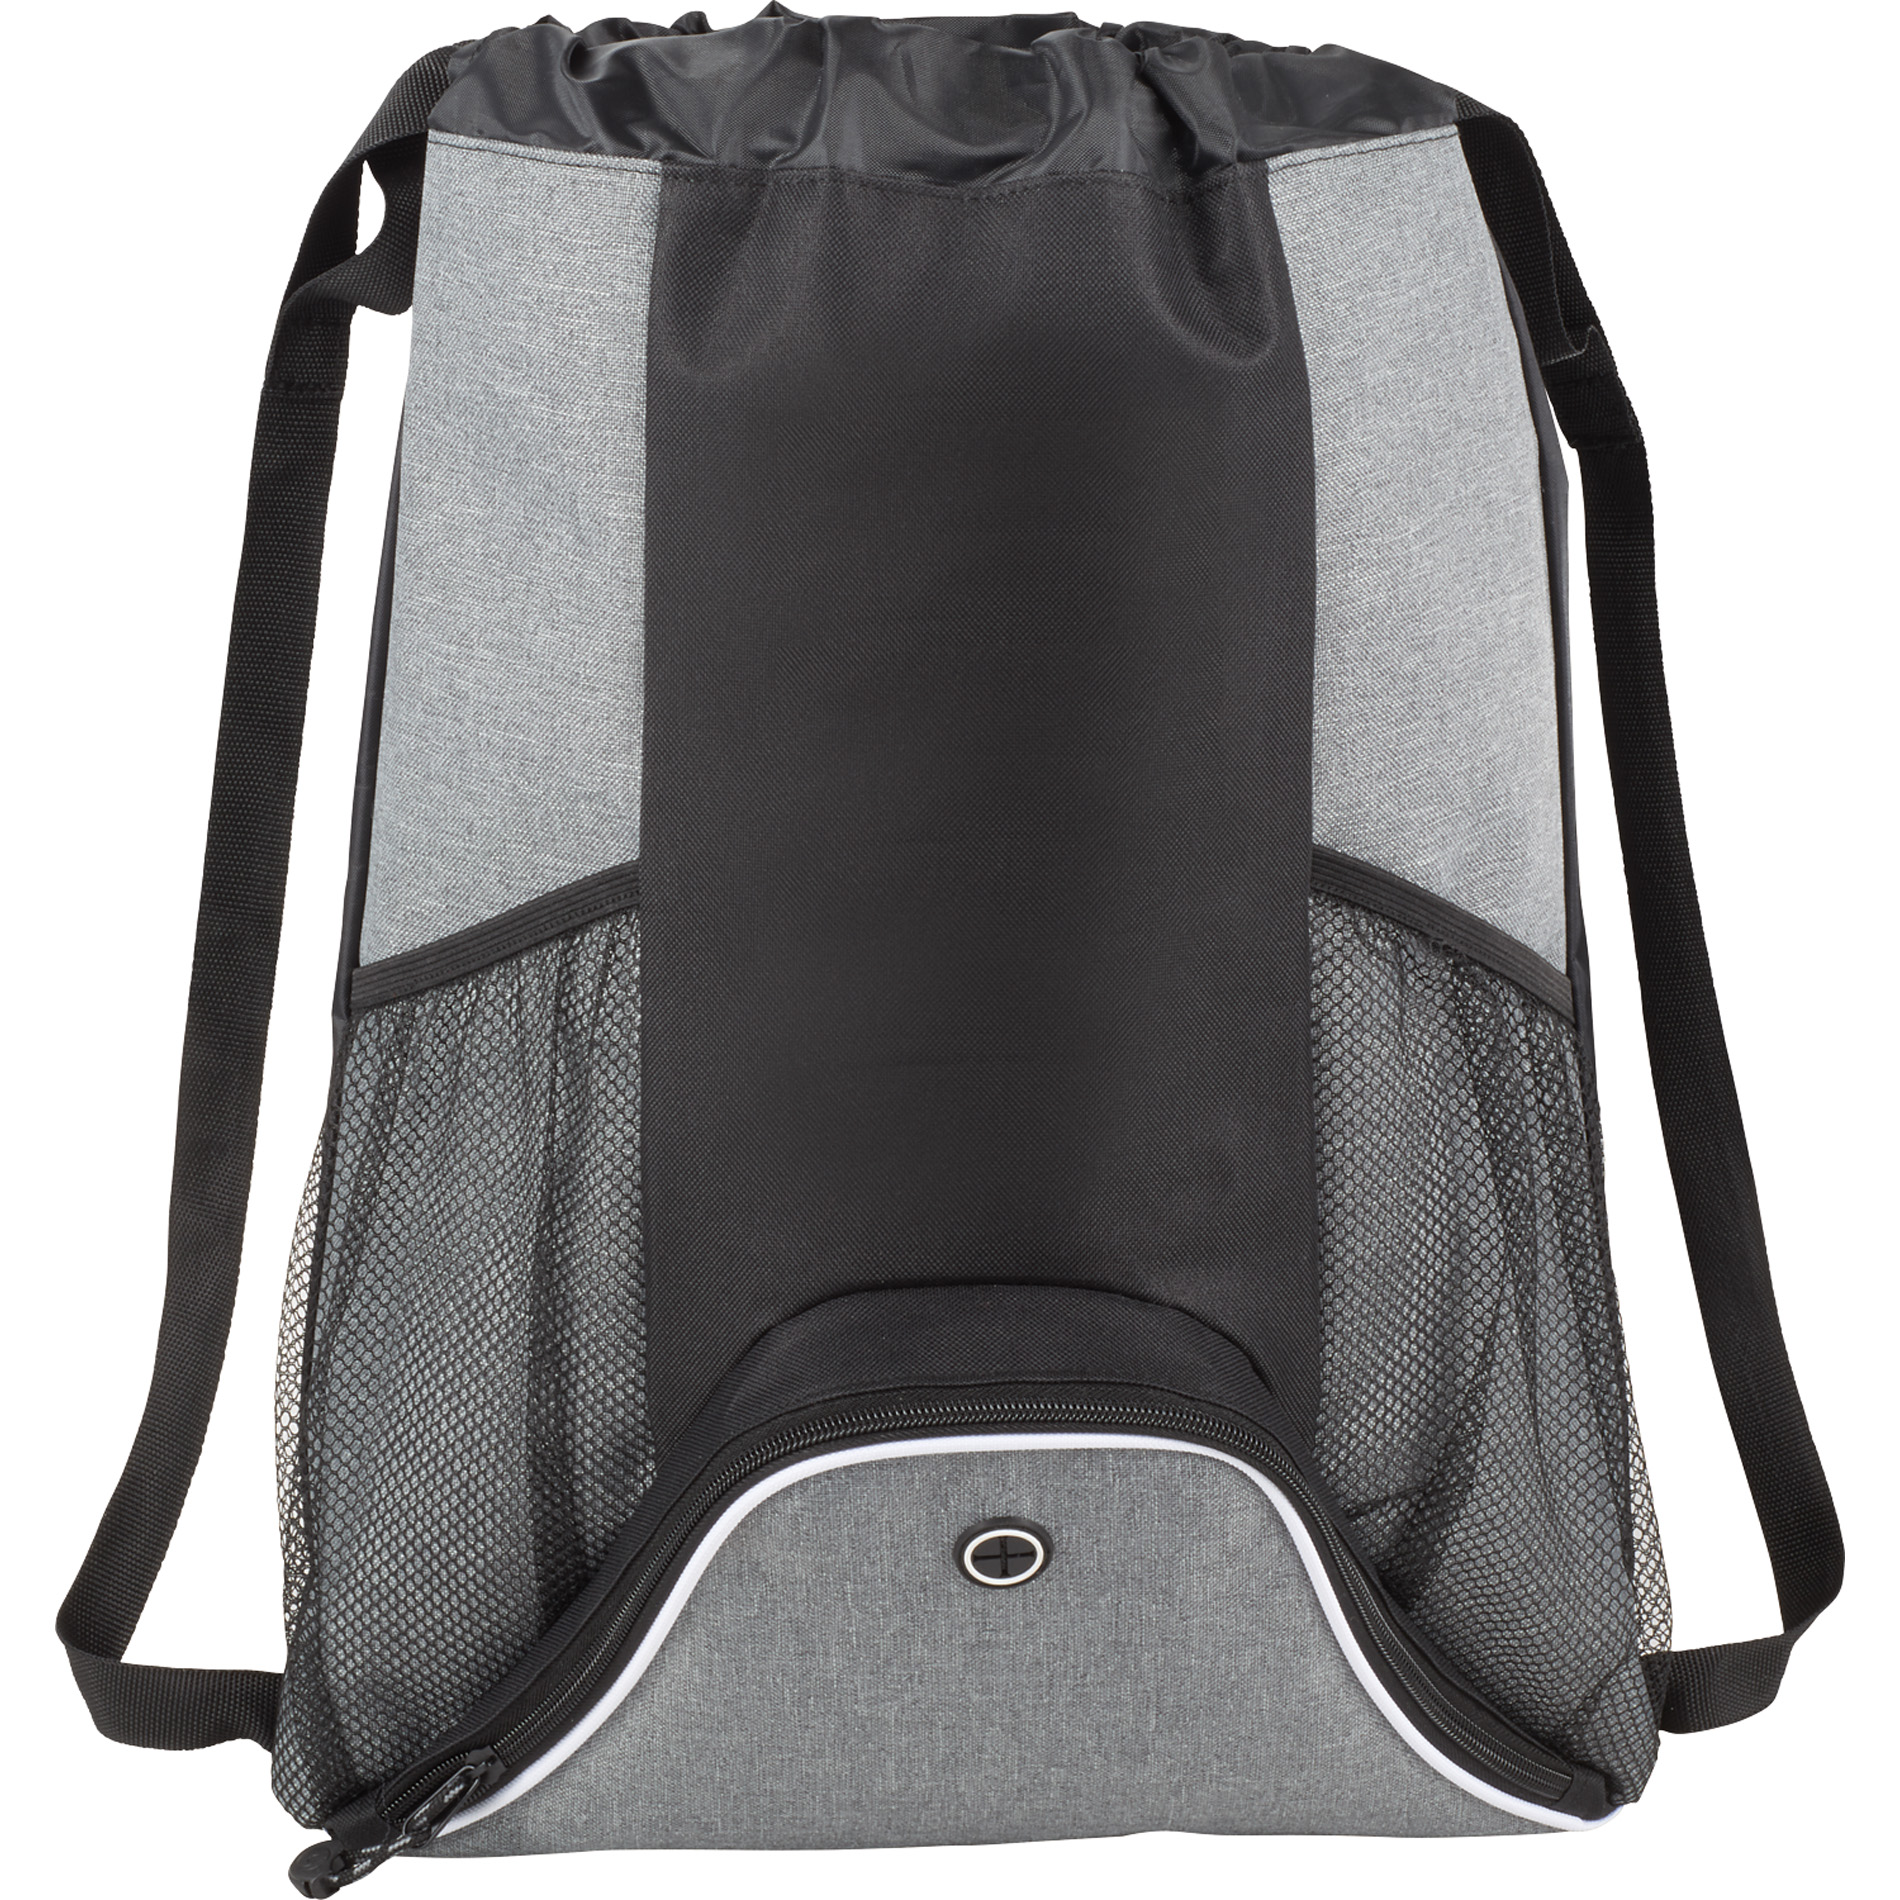 LEEDS 2075-02 - Corona Deluxe Drawstring Sportspack